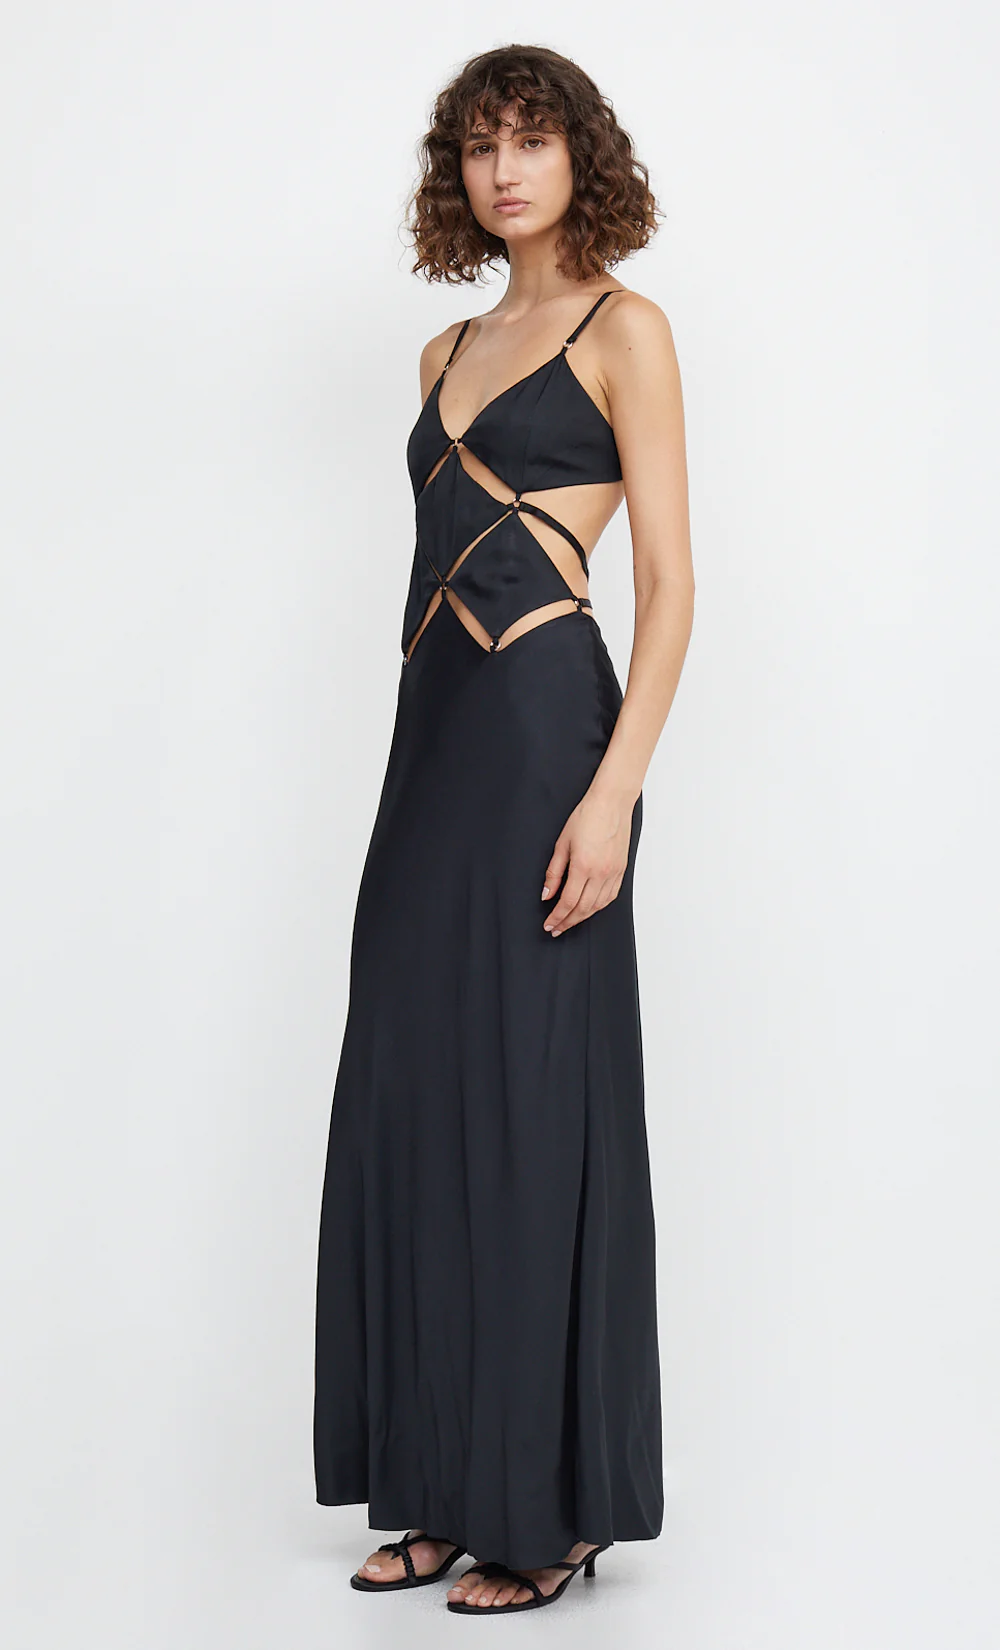 Bec + Bridge Diamond Days Strap Maxi Dress for rent. Black cut out formal dress.